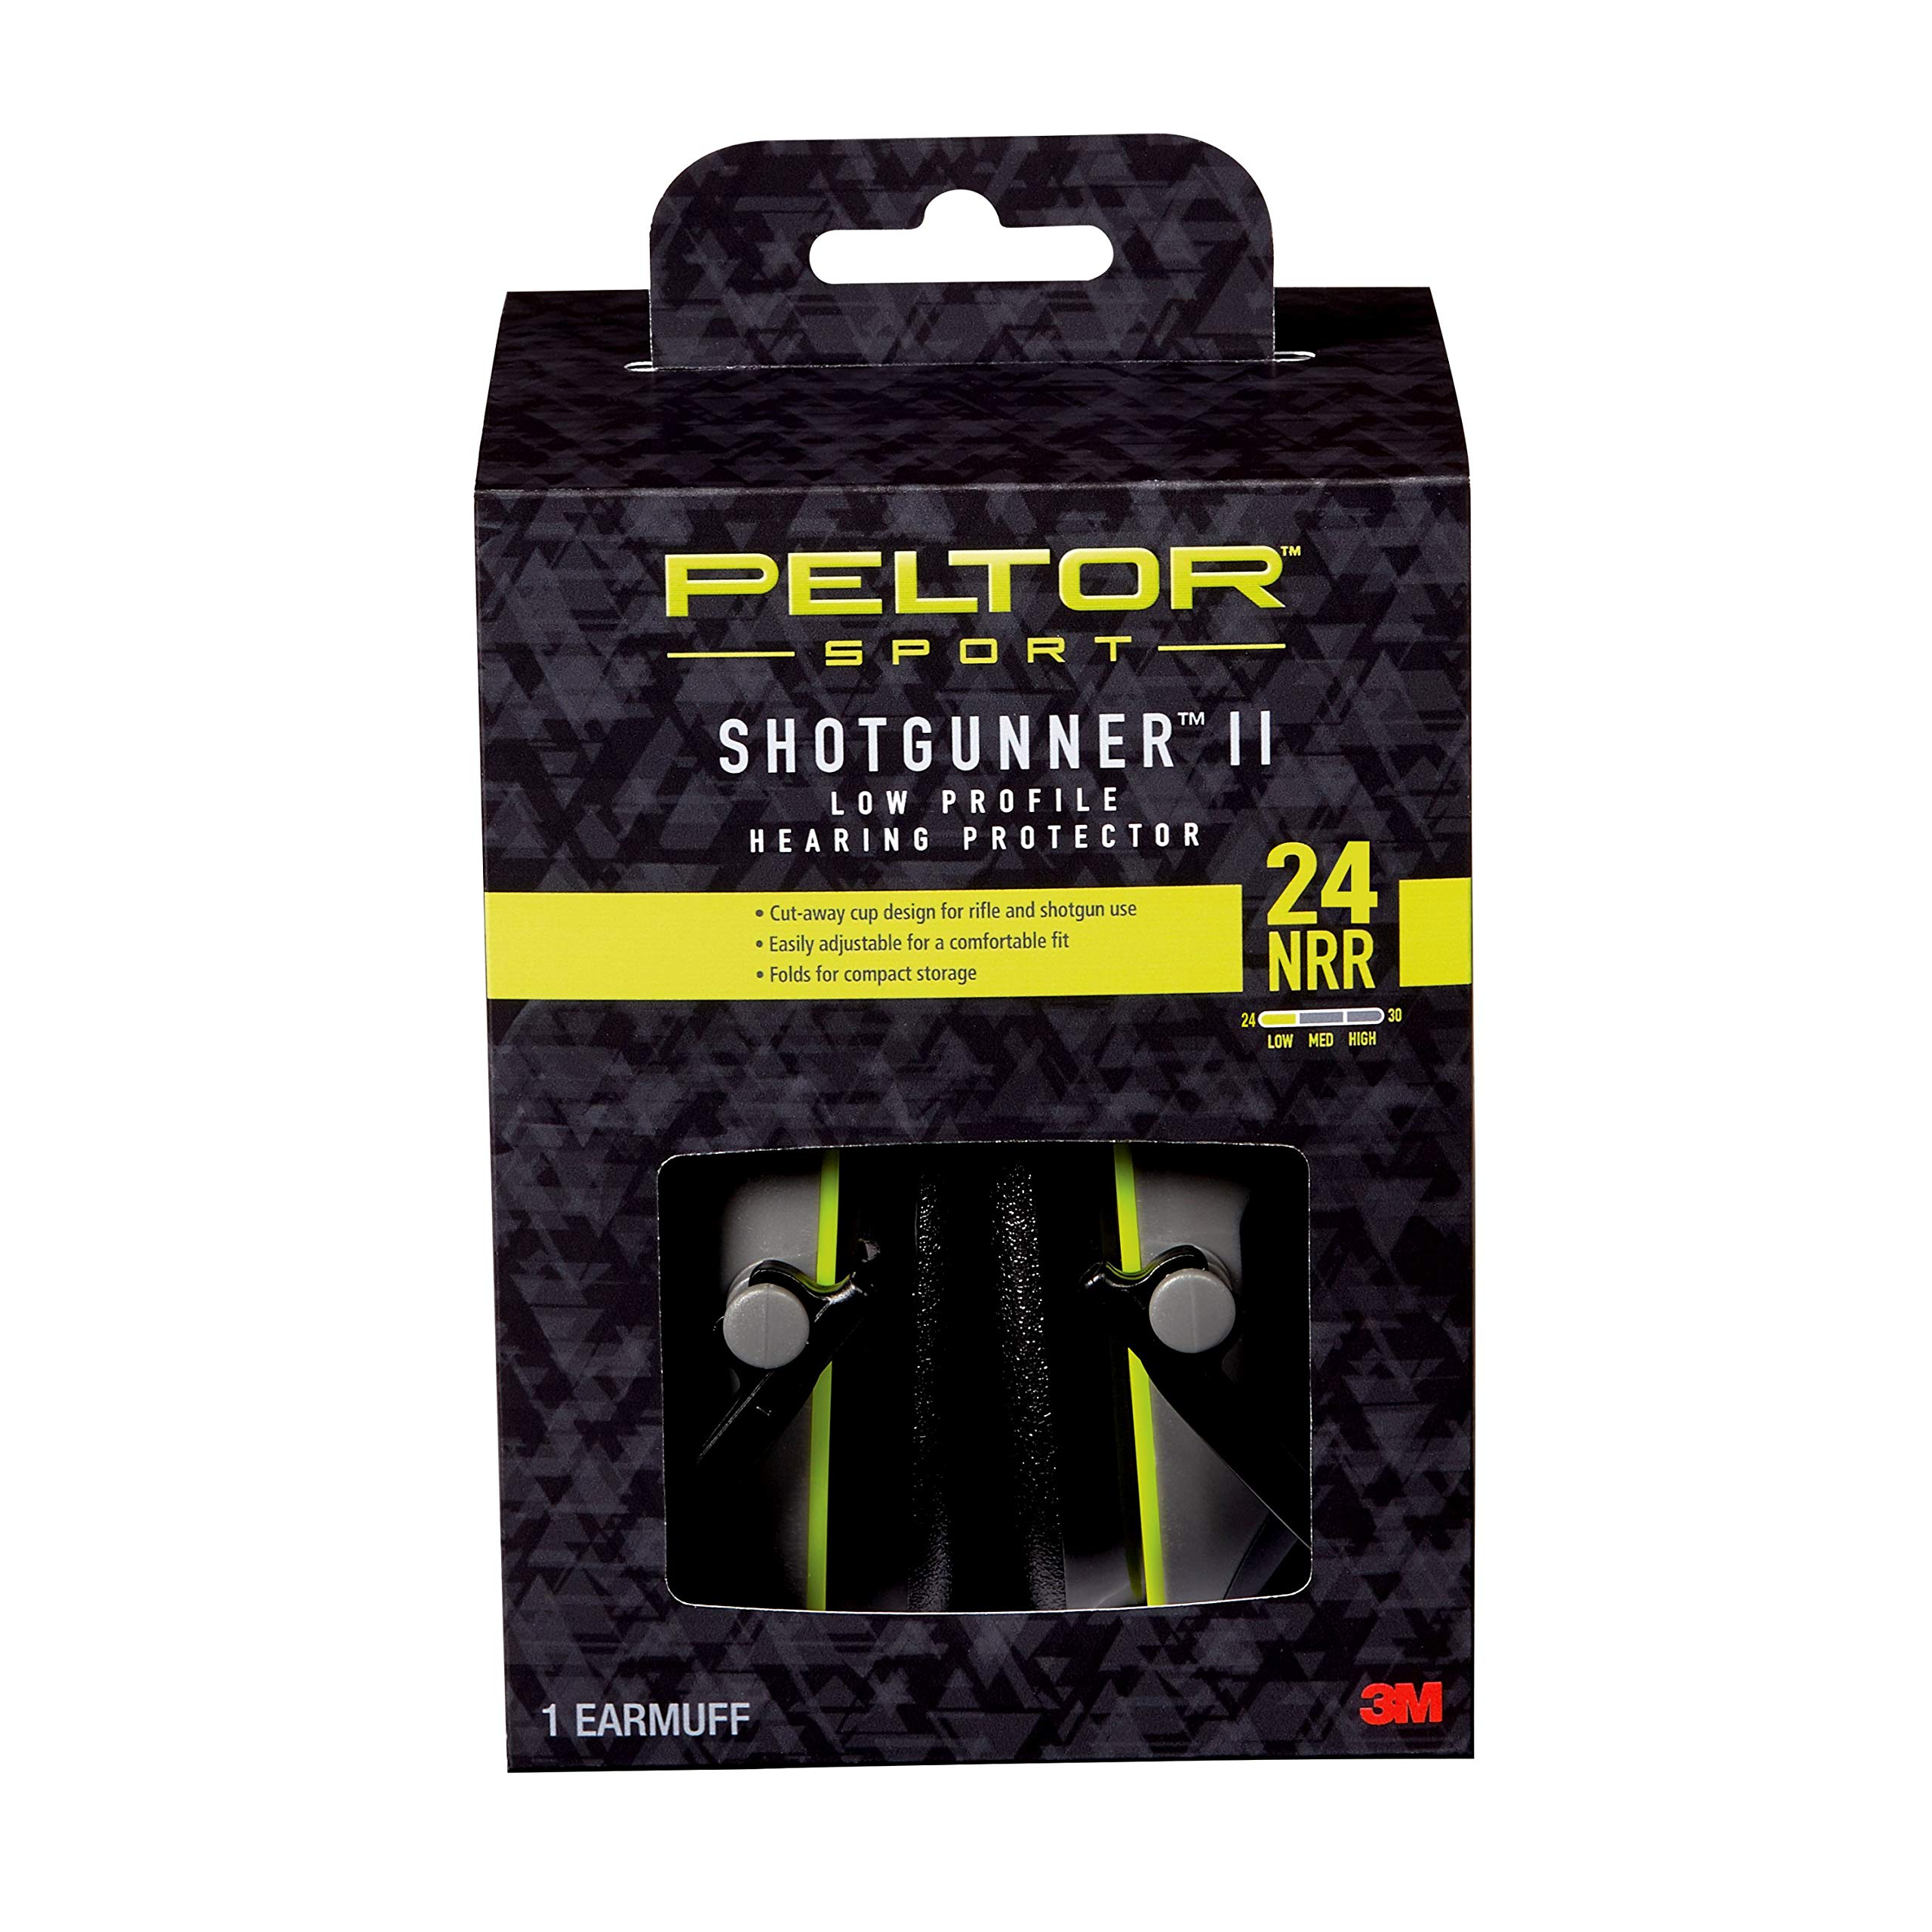 Peltor Sport Shotgunner II Low-Profile Hearing Protector, Black/Gray, NRR 24 dB, Earmuff for Hunting, Rifle and Shotgun Use